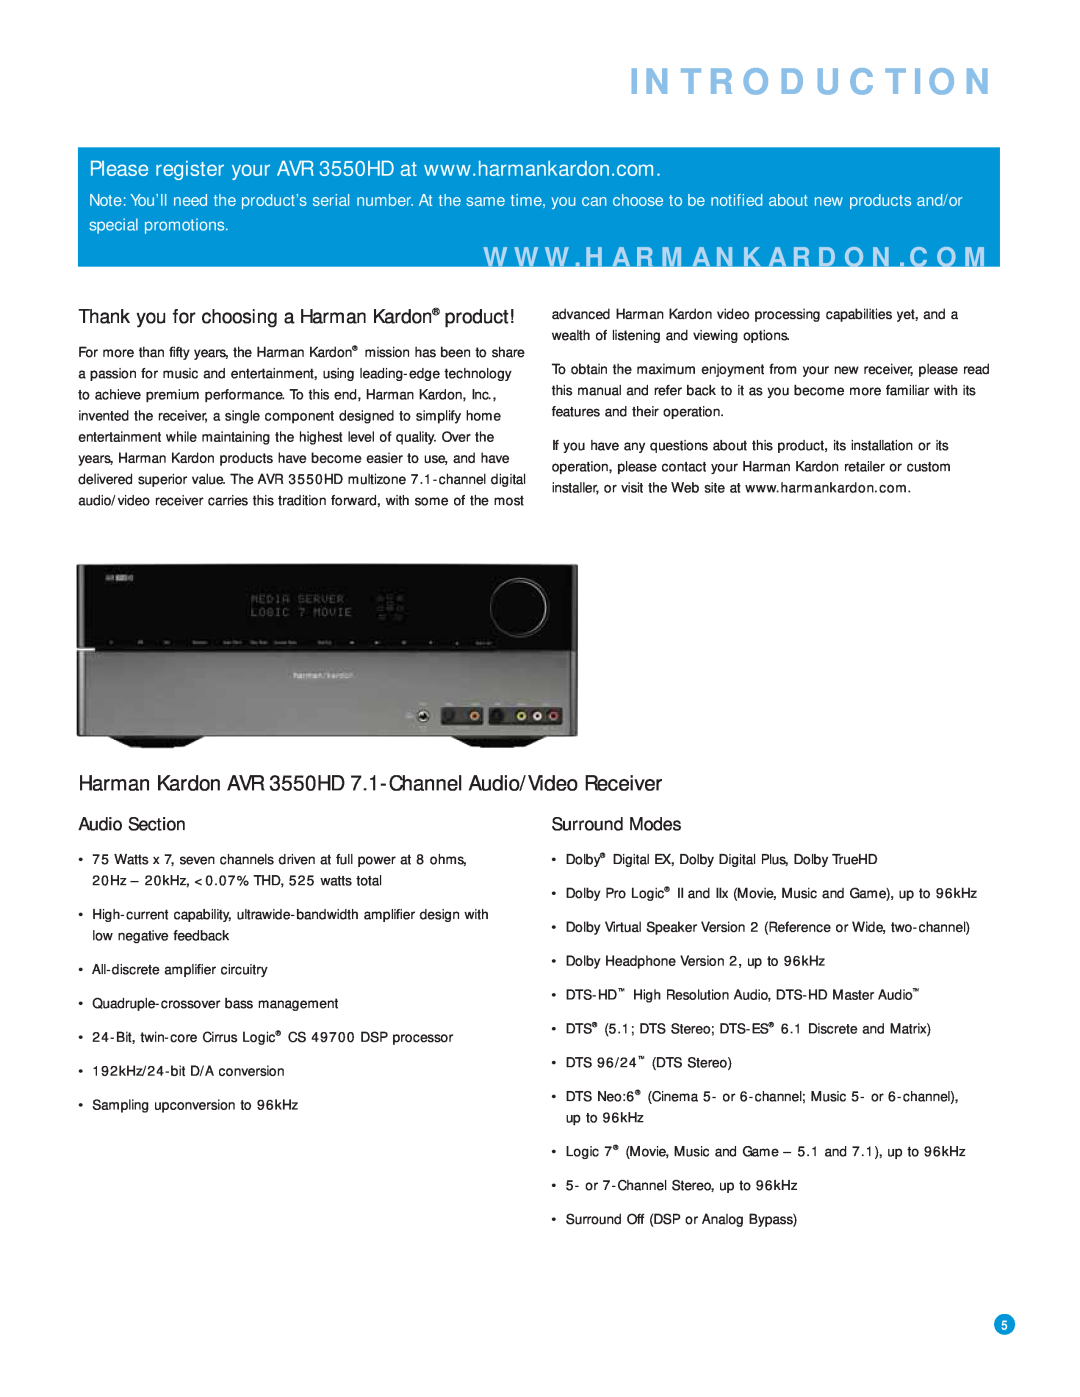 Harman-Kardon AVR 3550HD Introduction, Thank you for choosing a Harman Kardon product, Audio Section, Surround Modes 